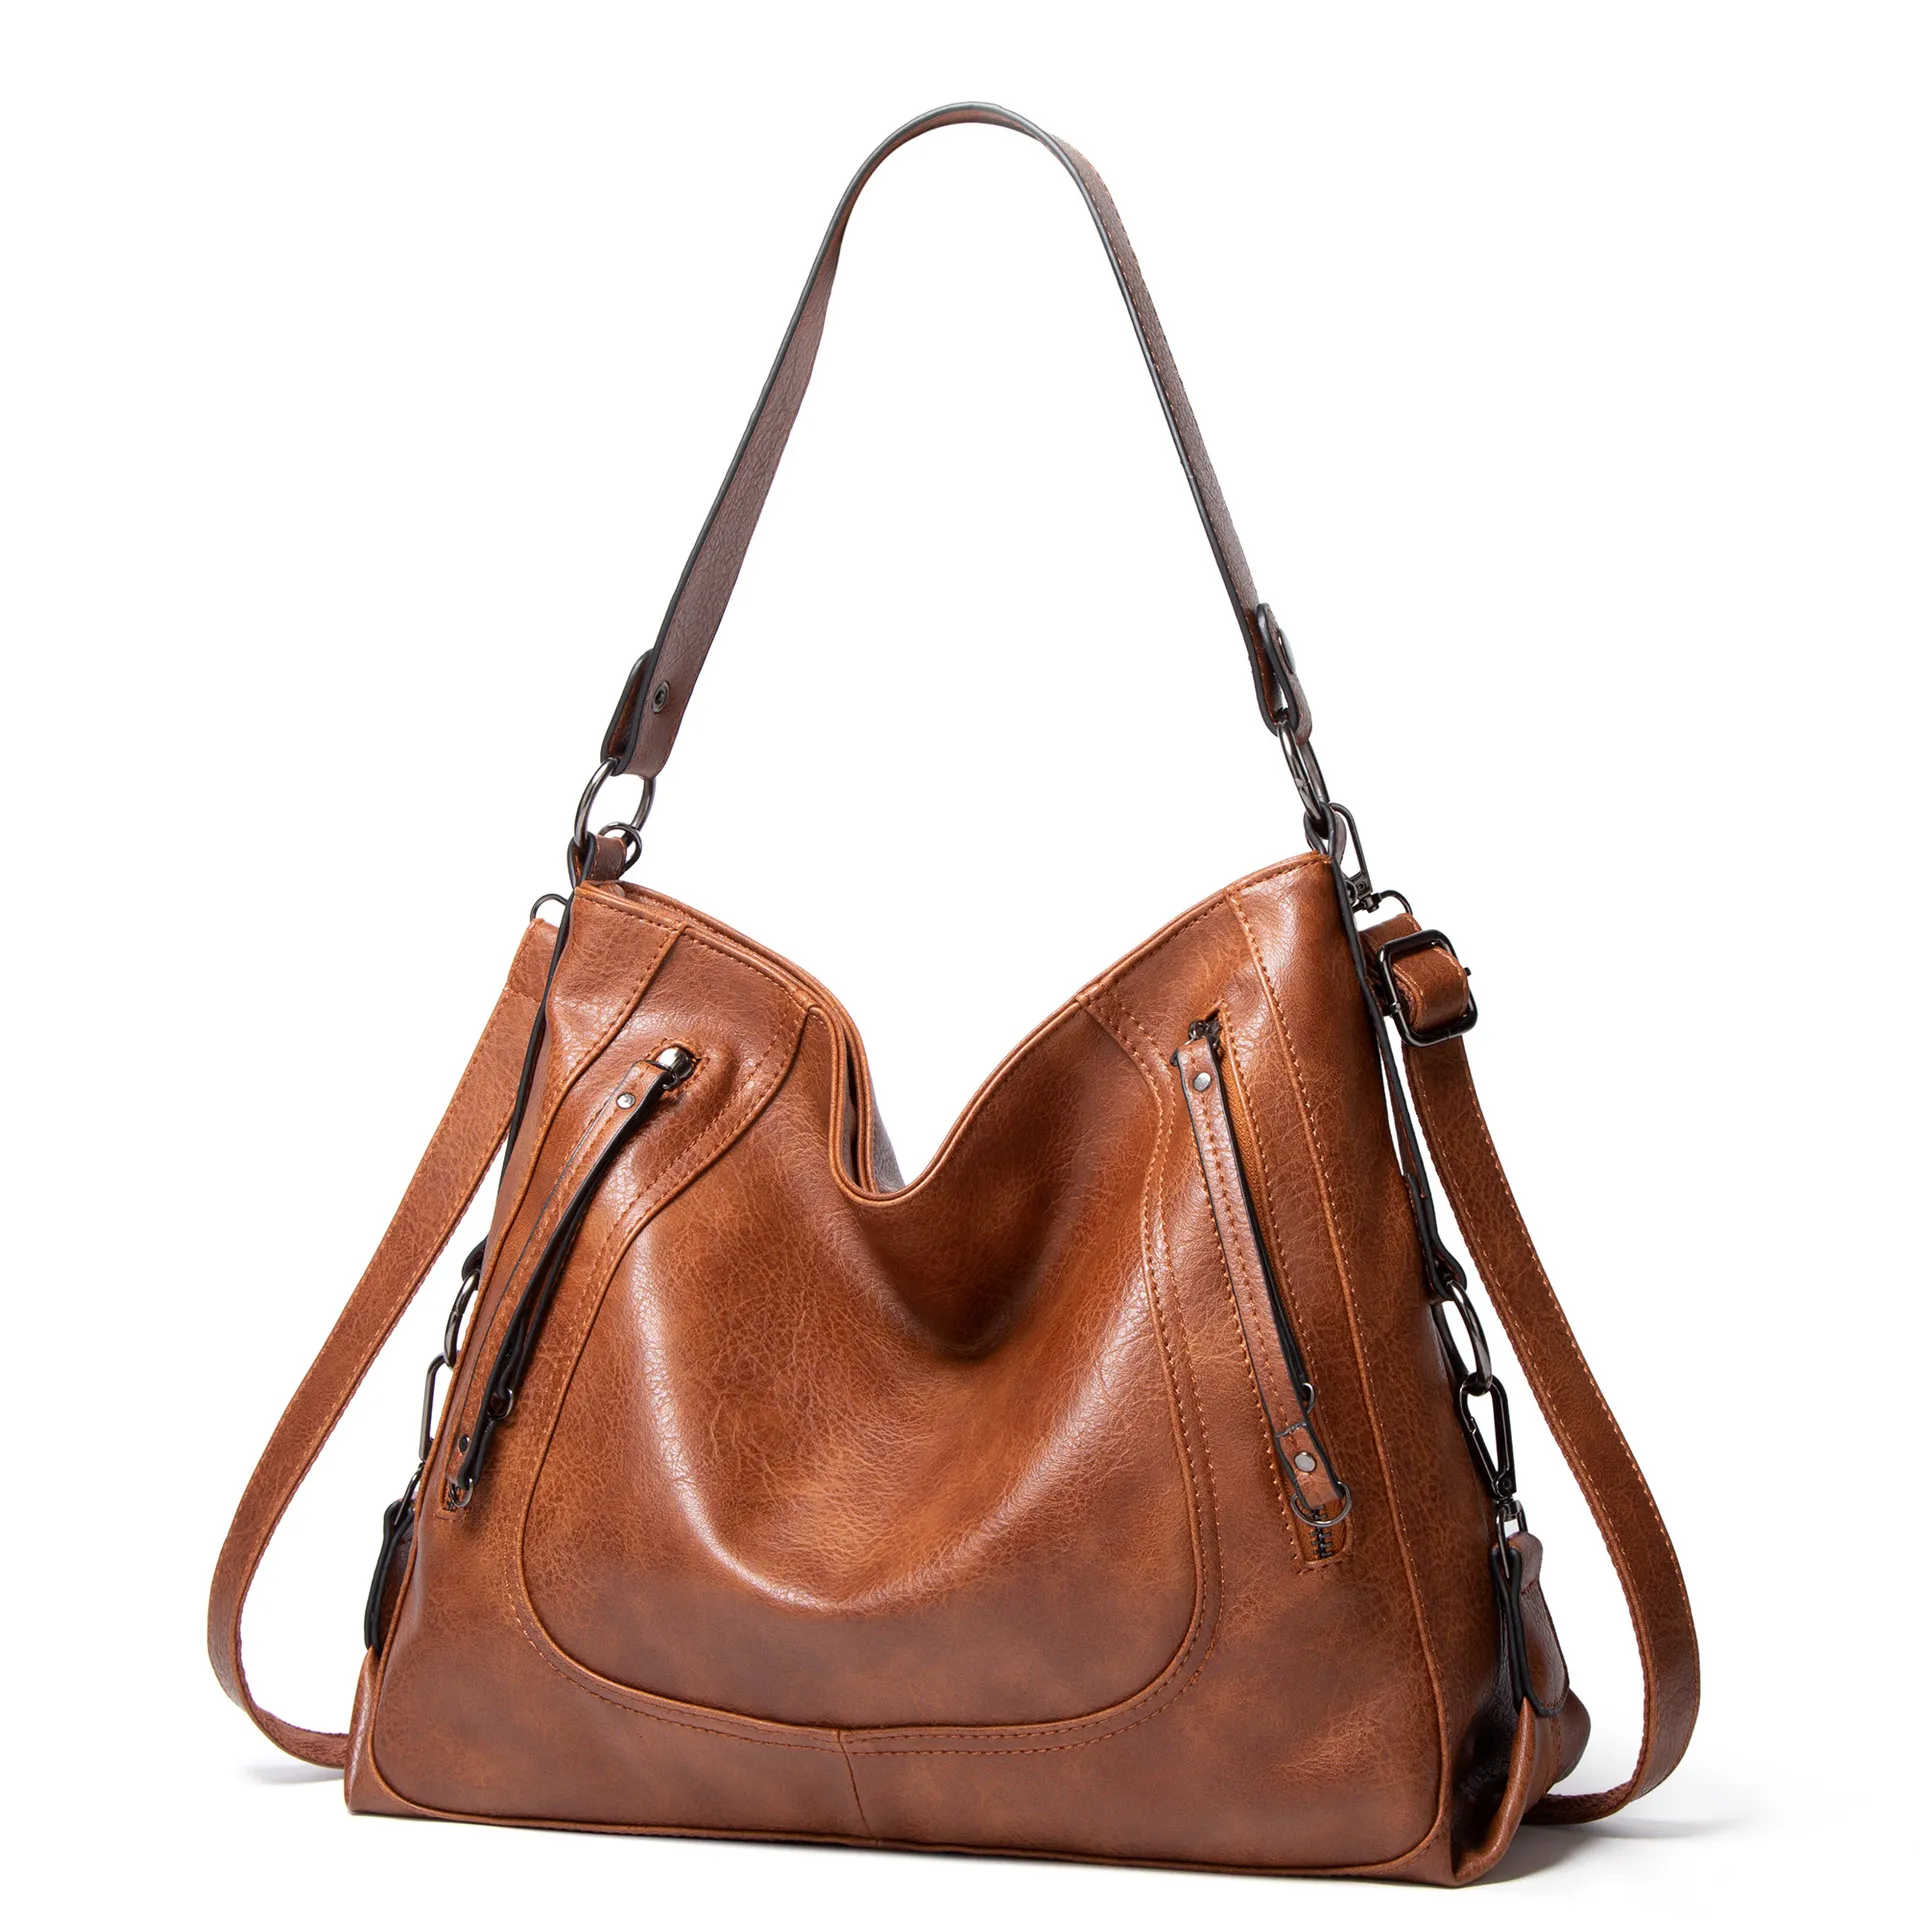 Wholesale Designer Handbags Review | Is Wholesale Designer Handbags Good? -  YouTube